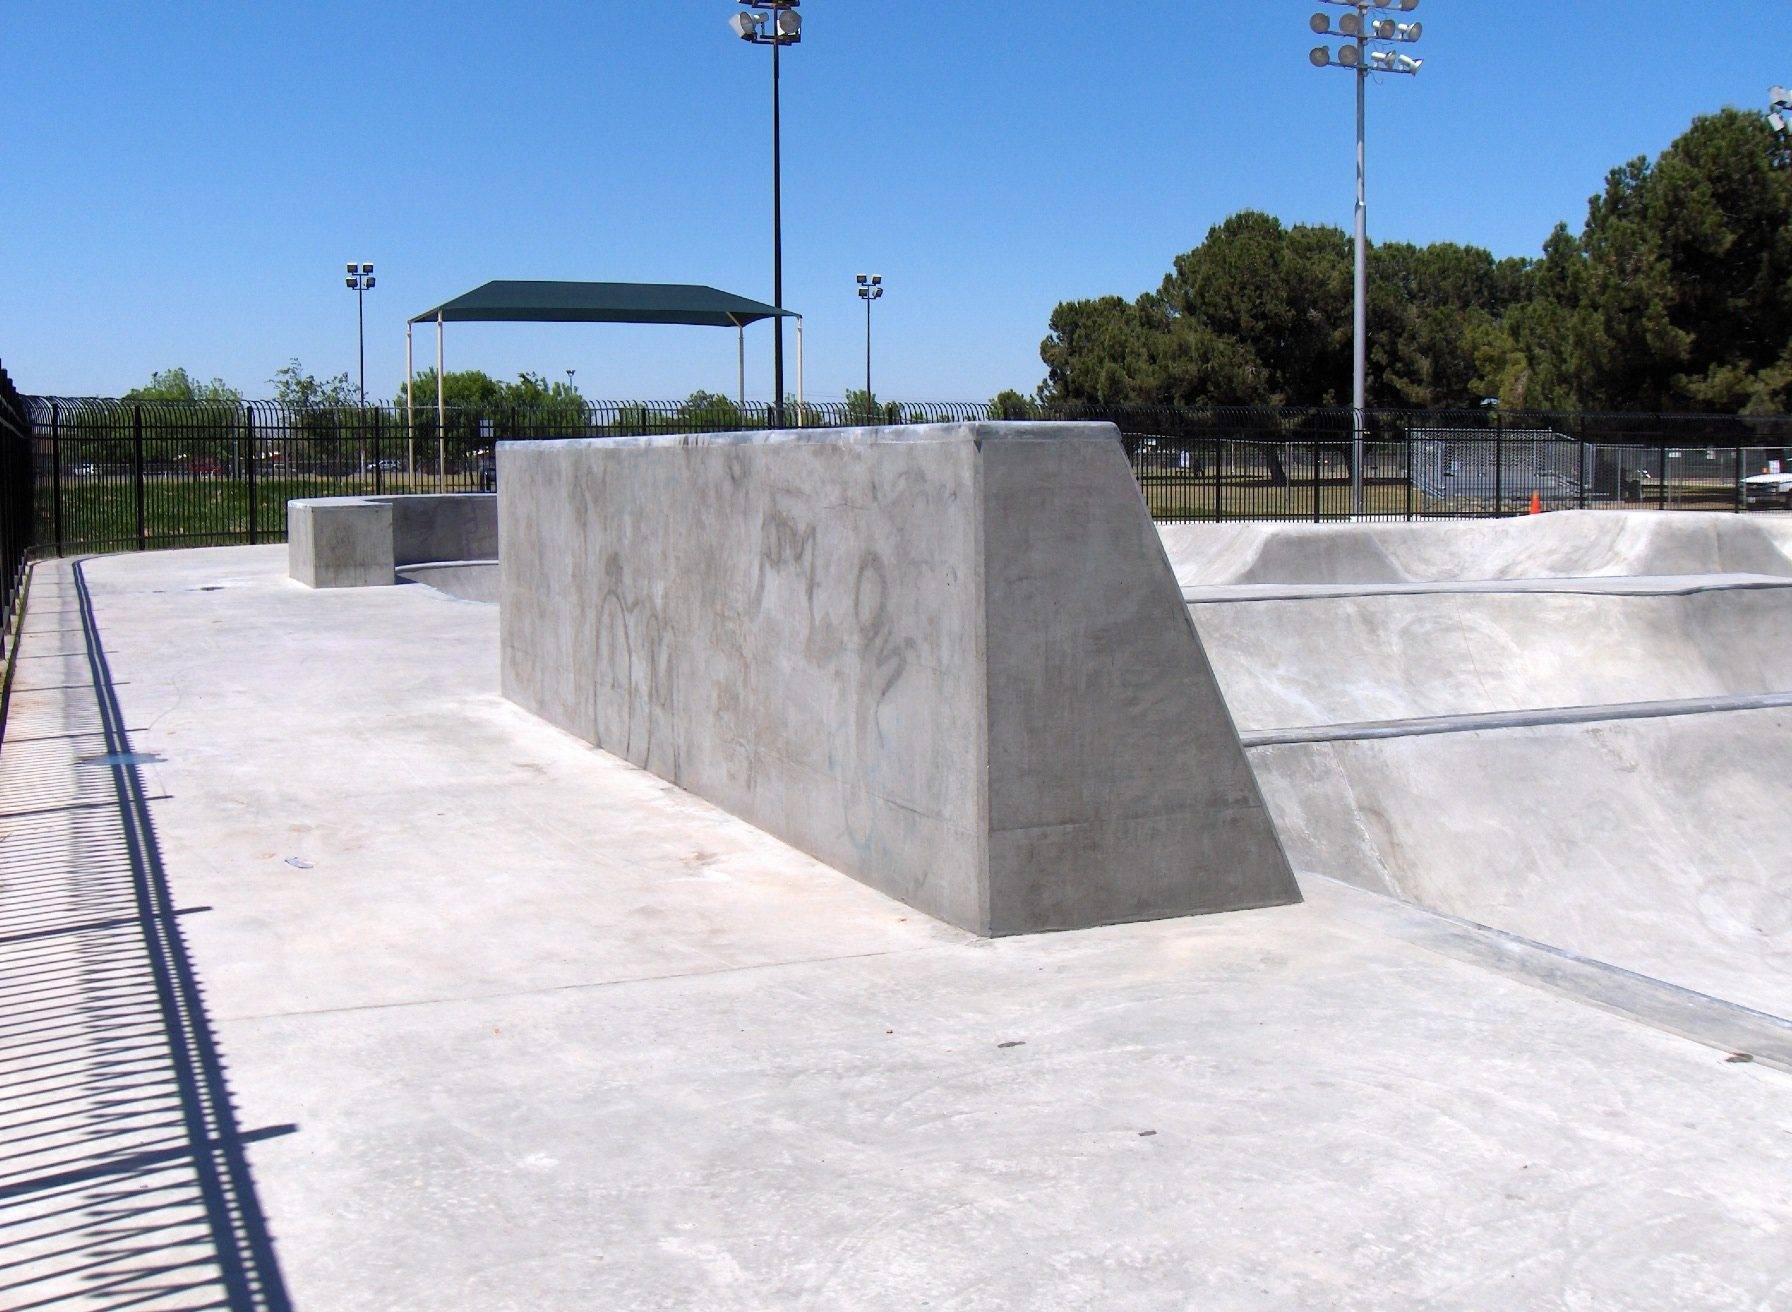 remove graffiti from skate park